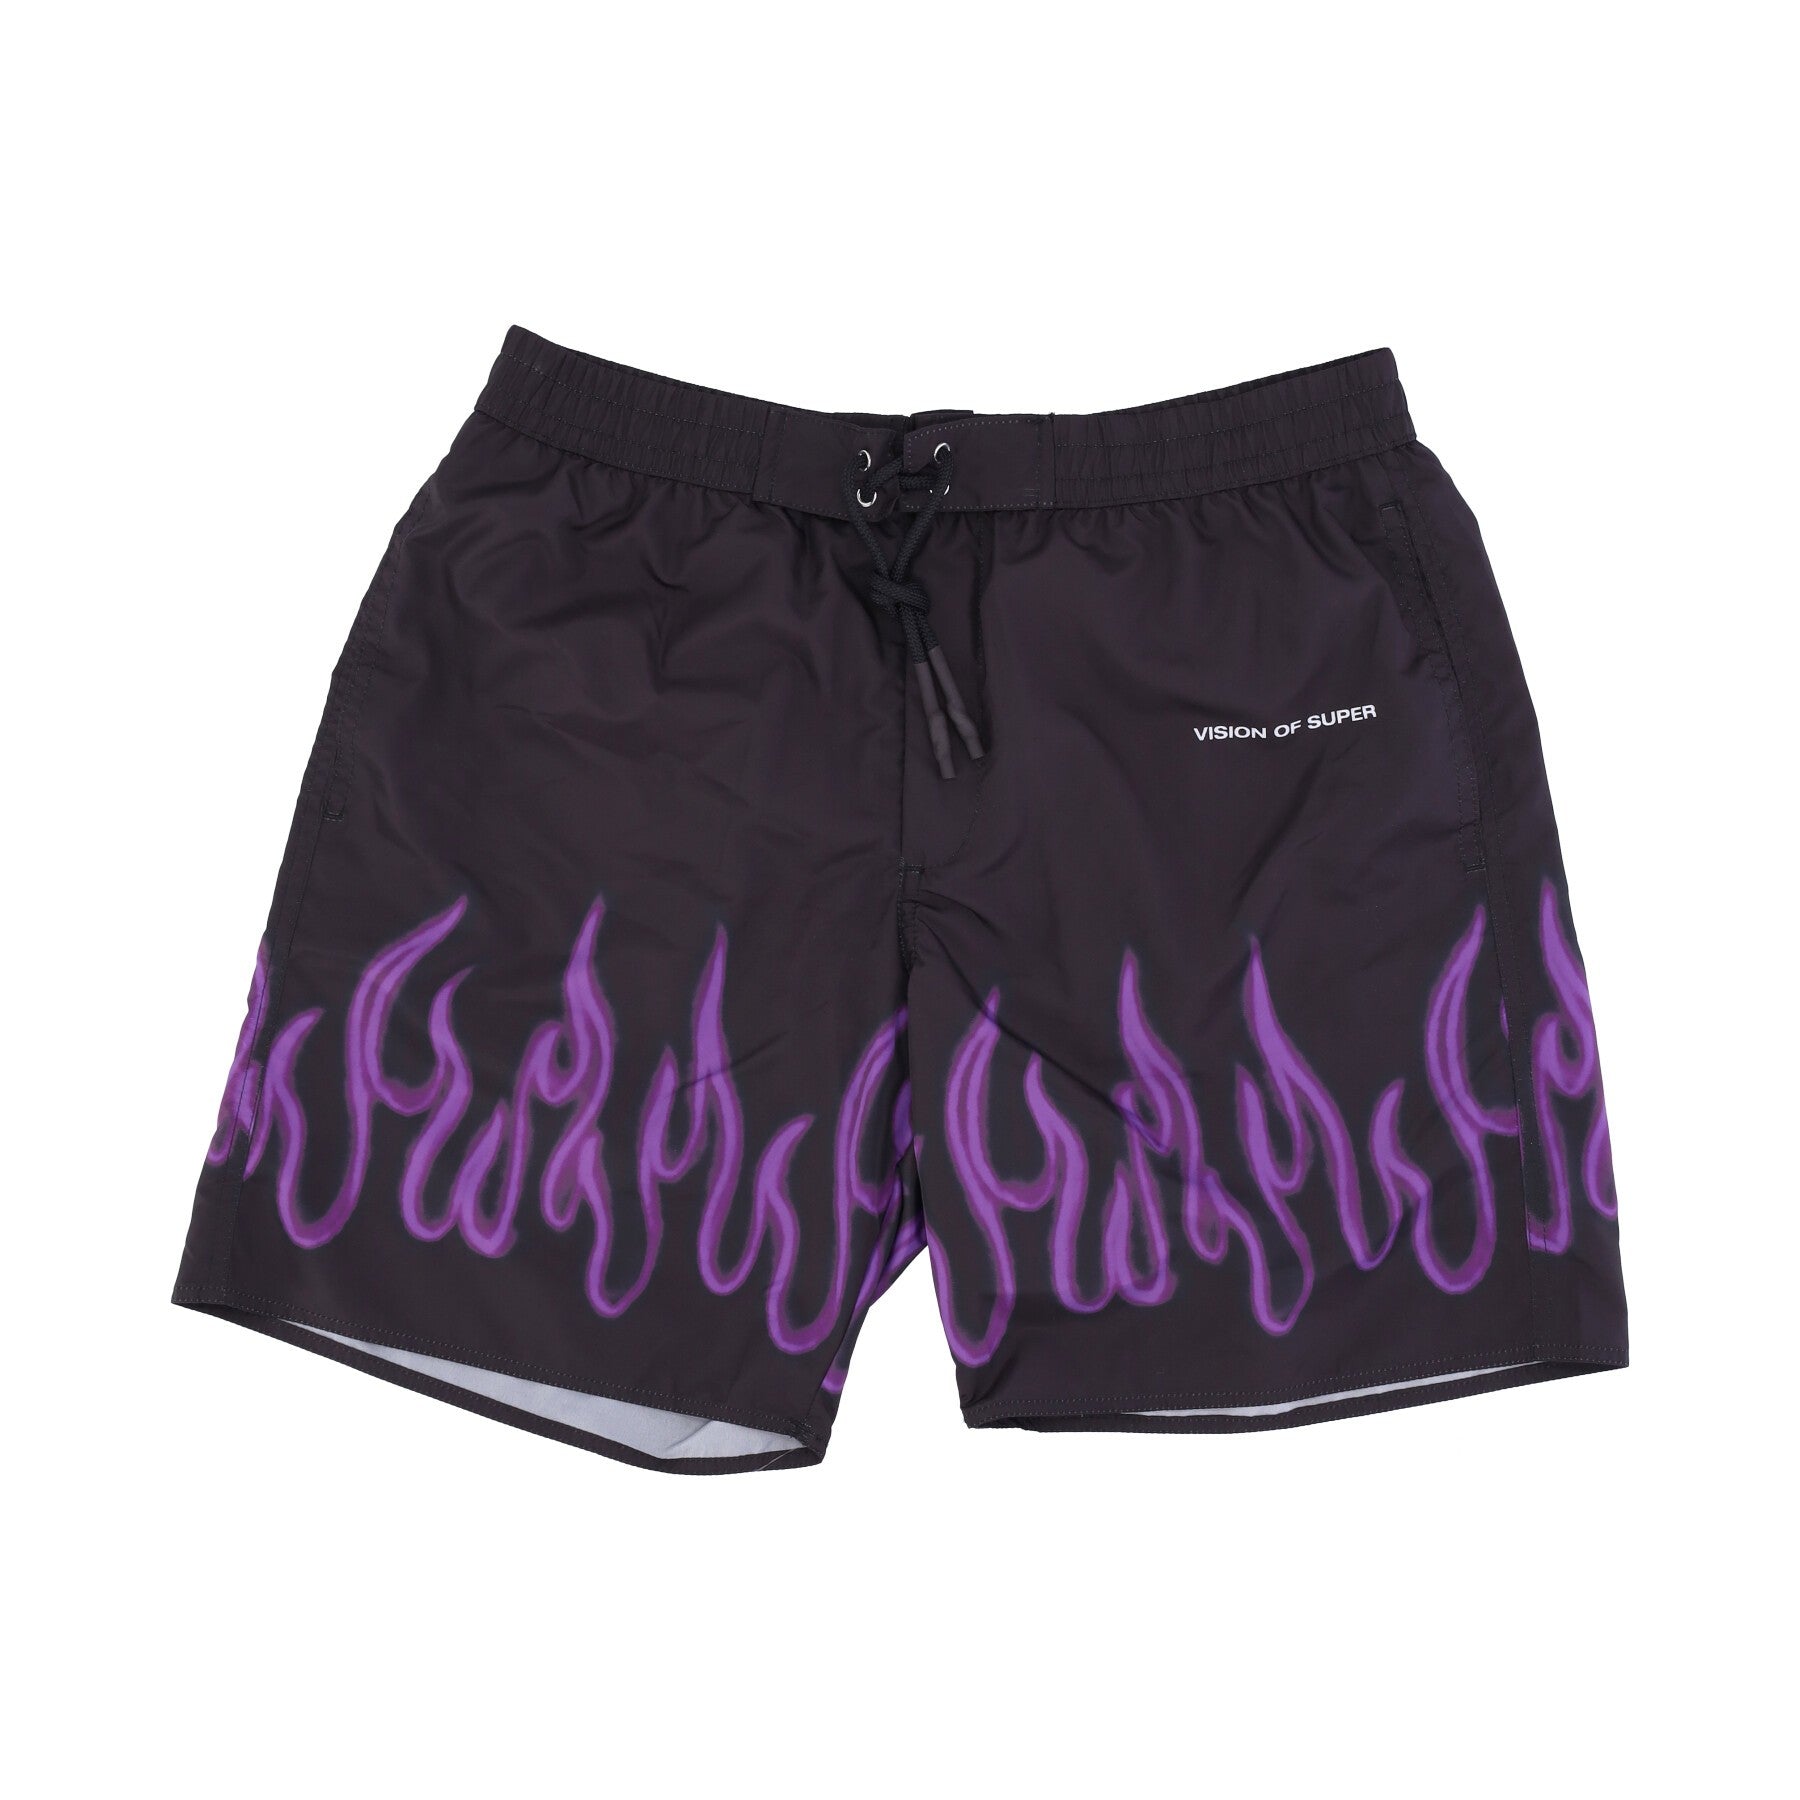 Spray Flames Swimwear Men's Swim Shorts Black/purple